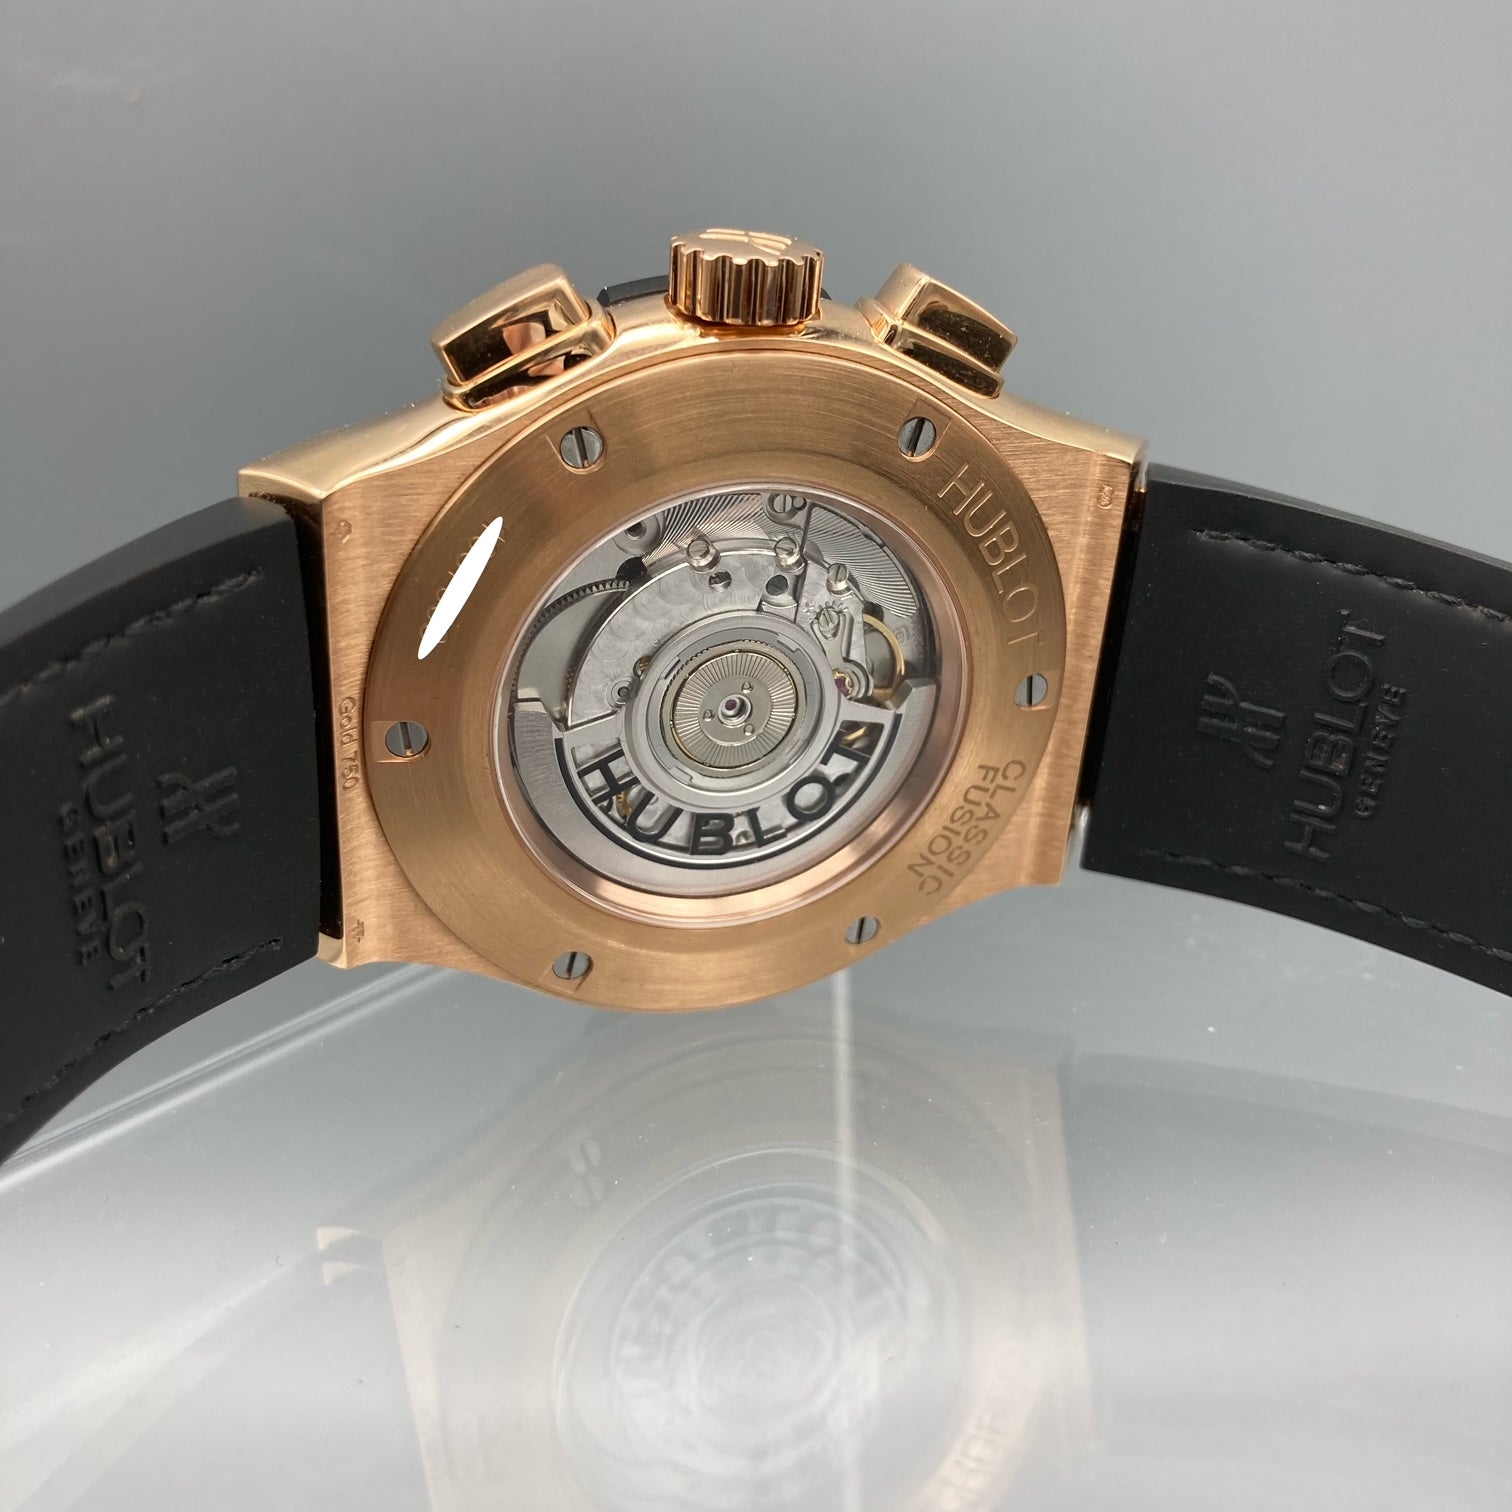 Hublot Classic Fusion Aero Chronograph 18K Rose Gold Watch - 525.OX.0180.LR